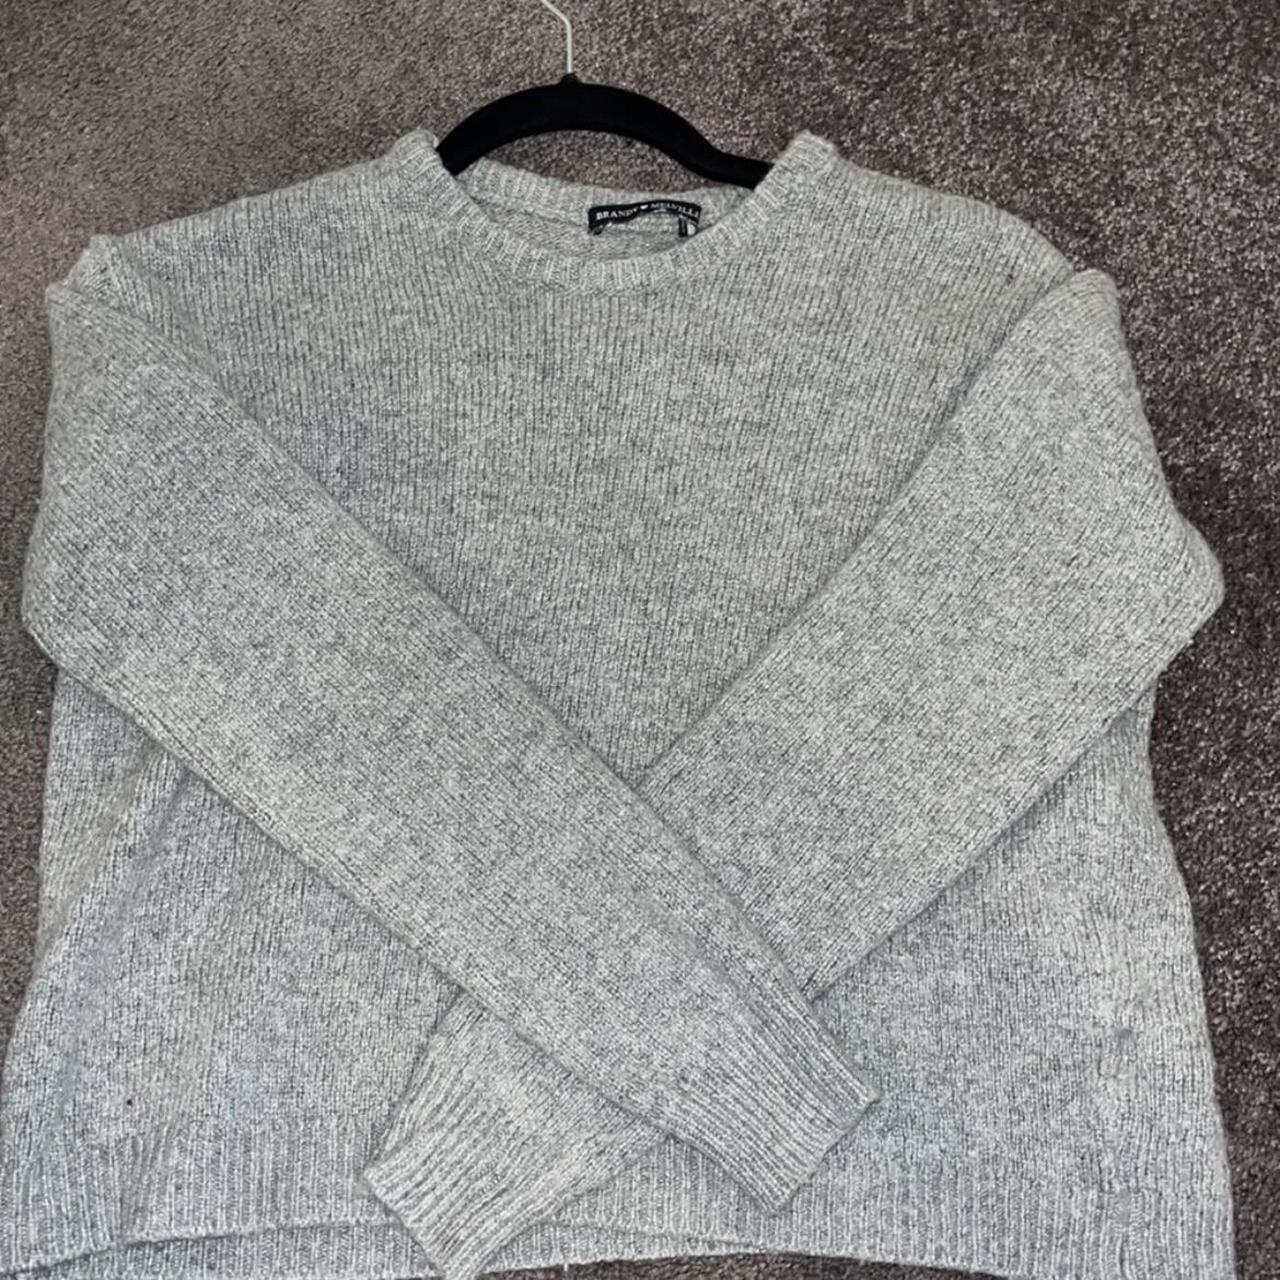 Brandy Melville- Gray Sweater Size small - Depop